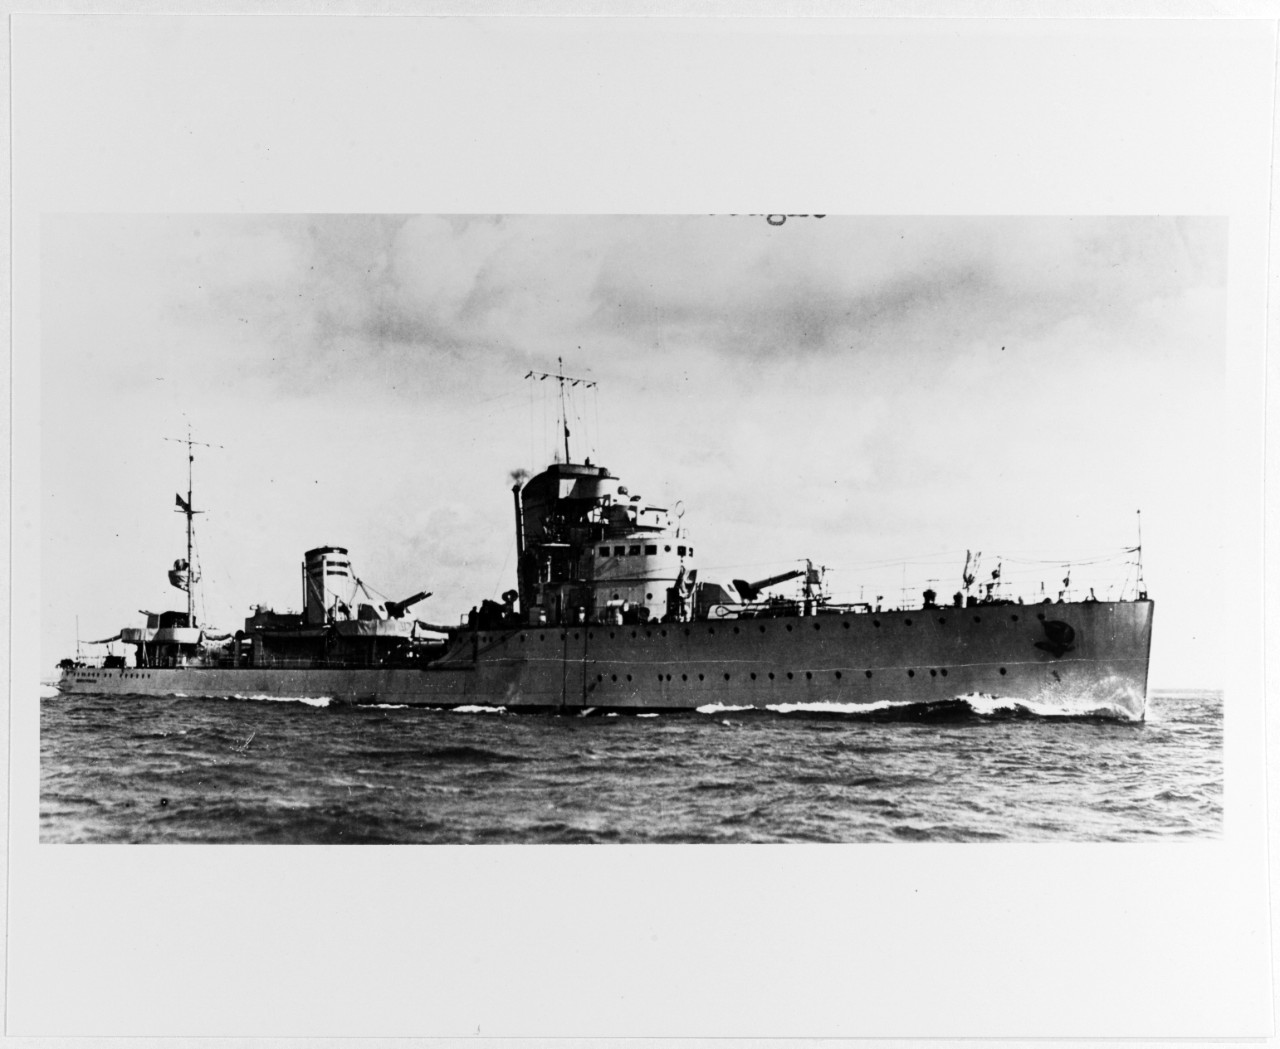 EMANUELE PESSAGNO (Italian destroyer, 1929-1942)